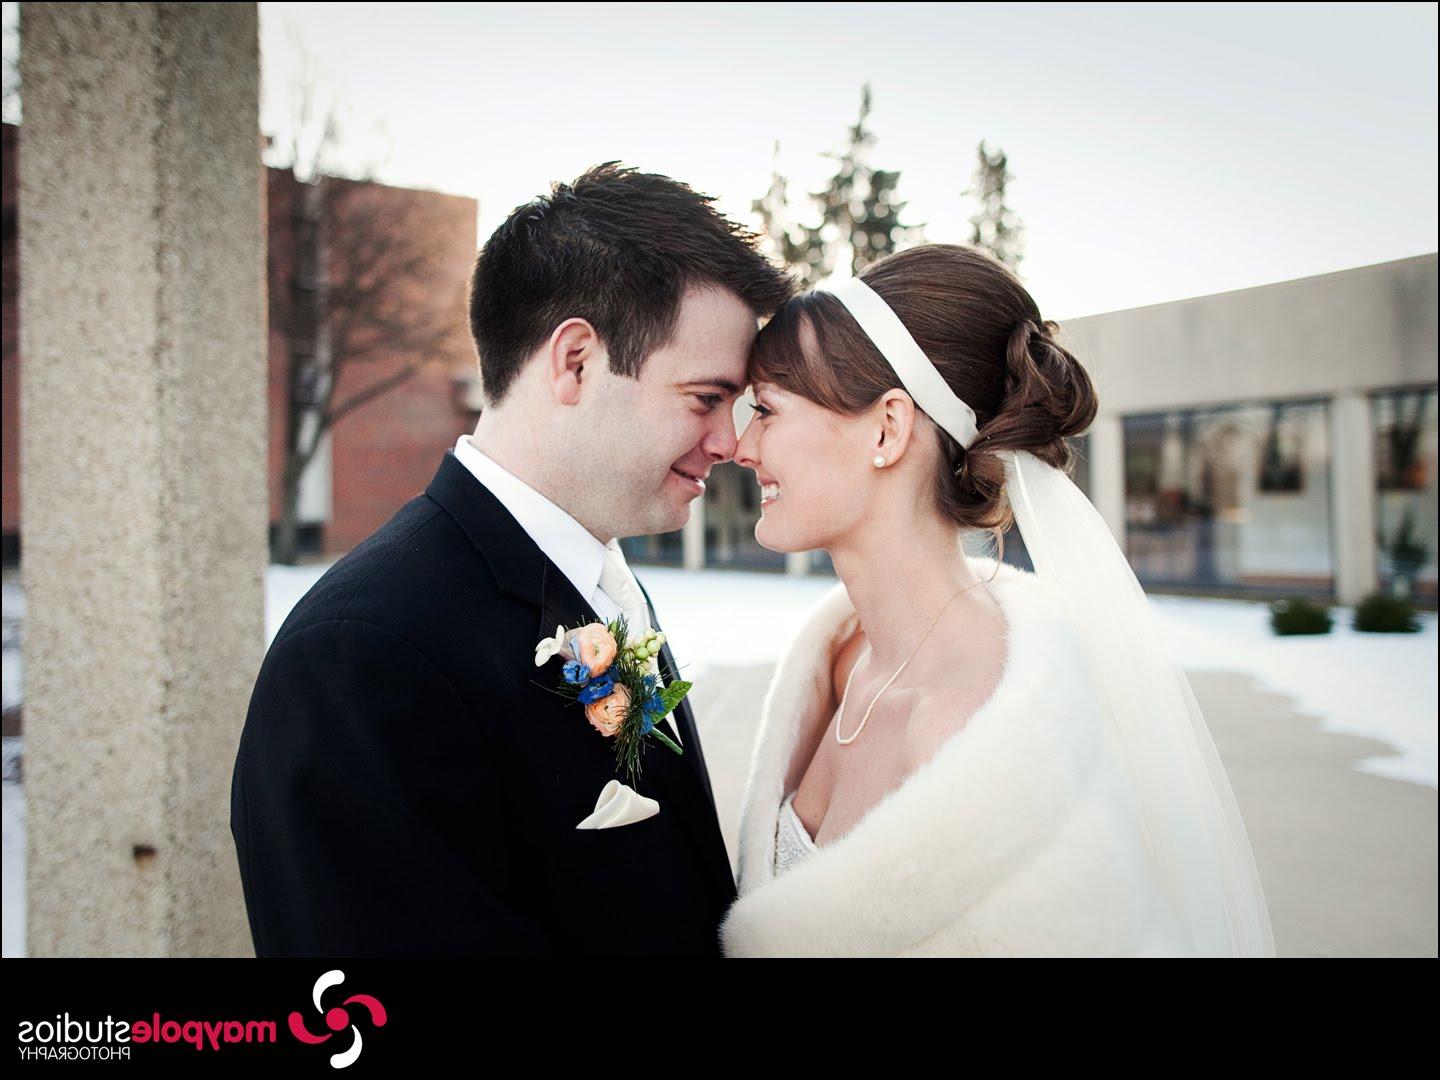 Kisses and snow, a winter wedding for Sarah & Matt